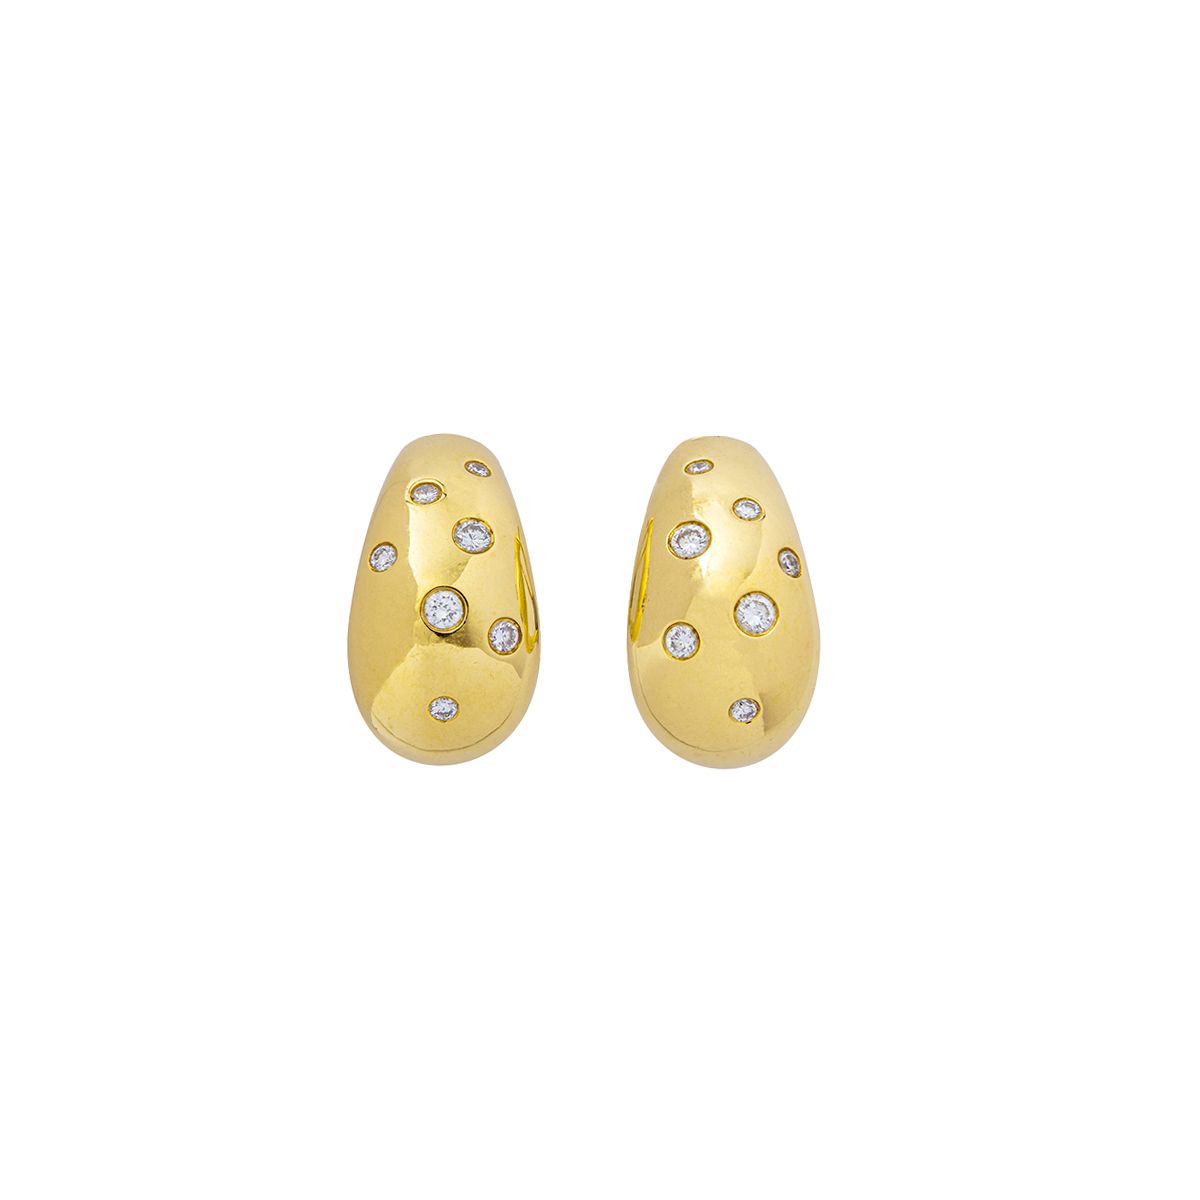 Null 18K黄金镶钻石耳环

约1980年

尺寸：21 x 11 mm

毛重 : 16,50 g